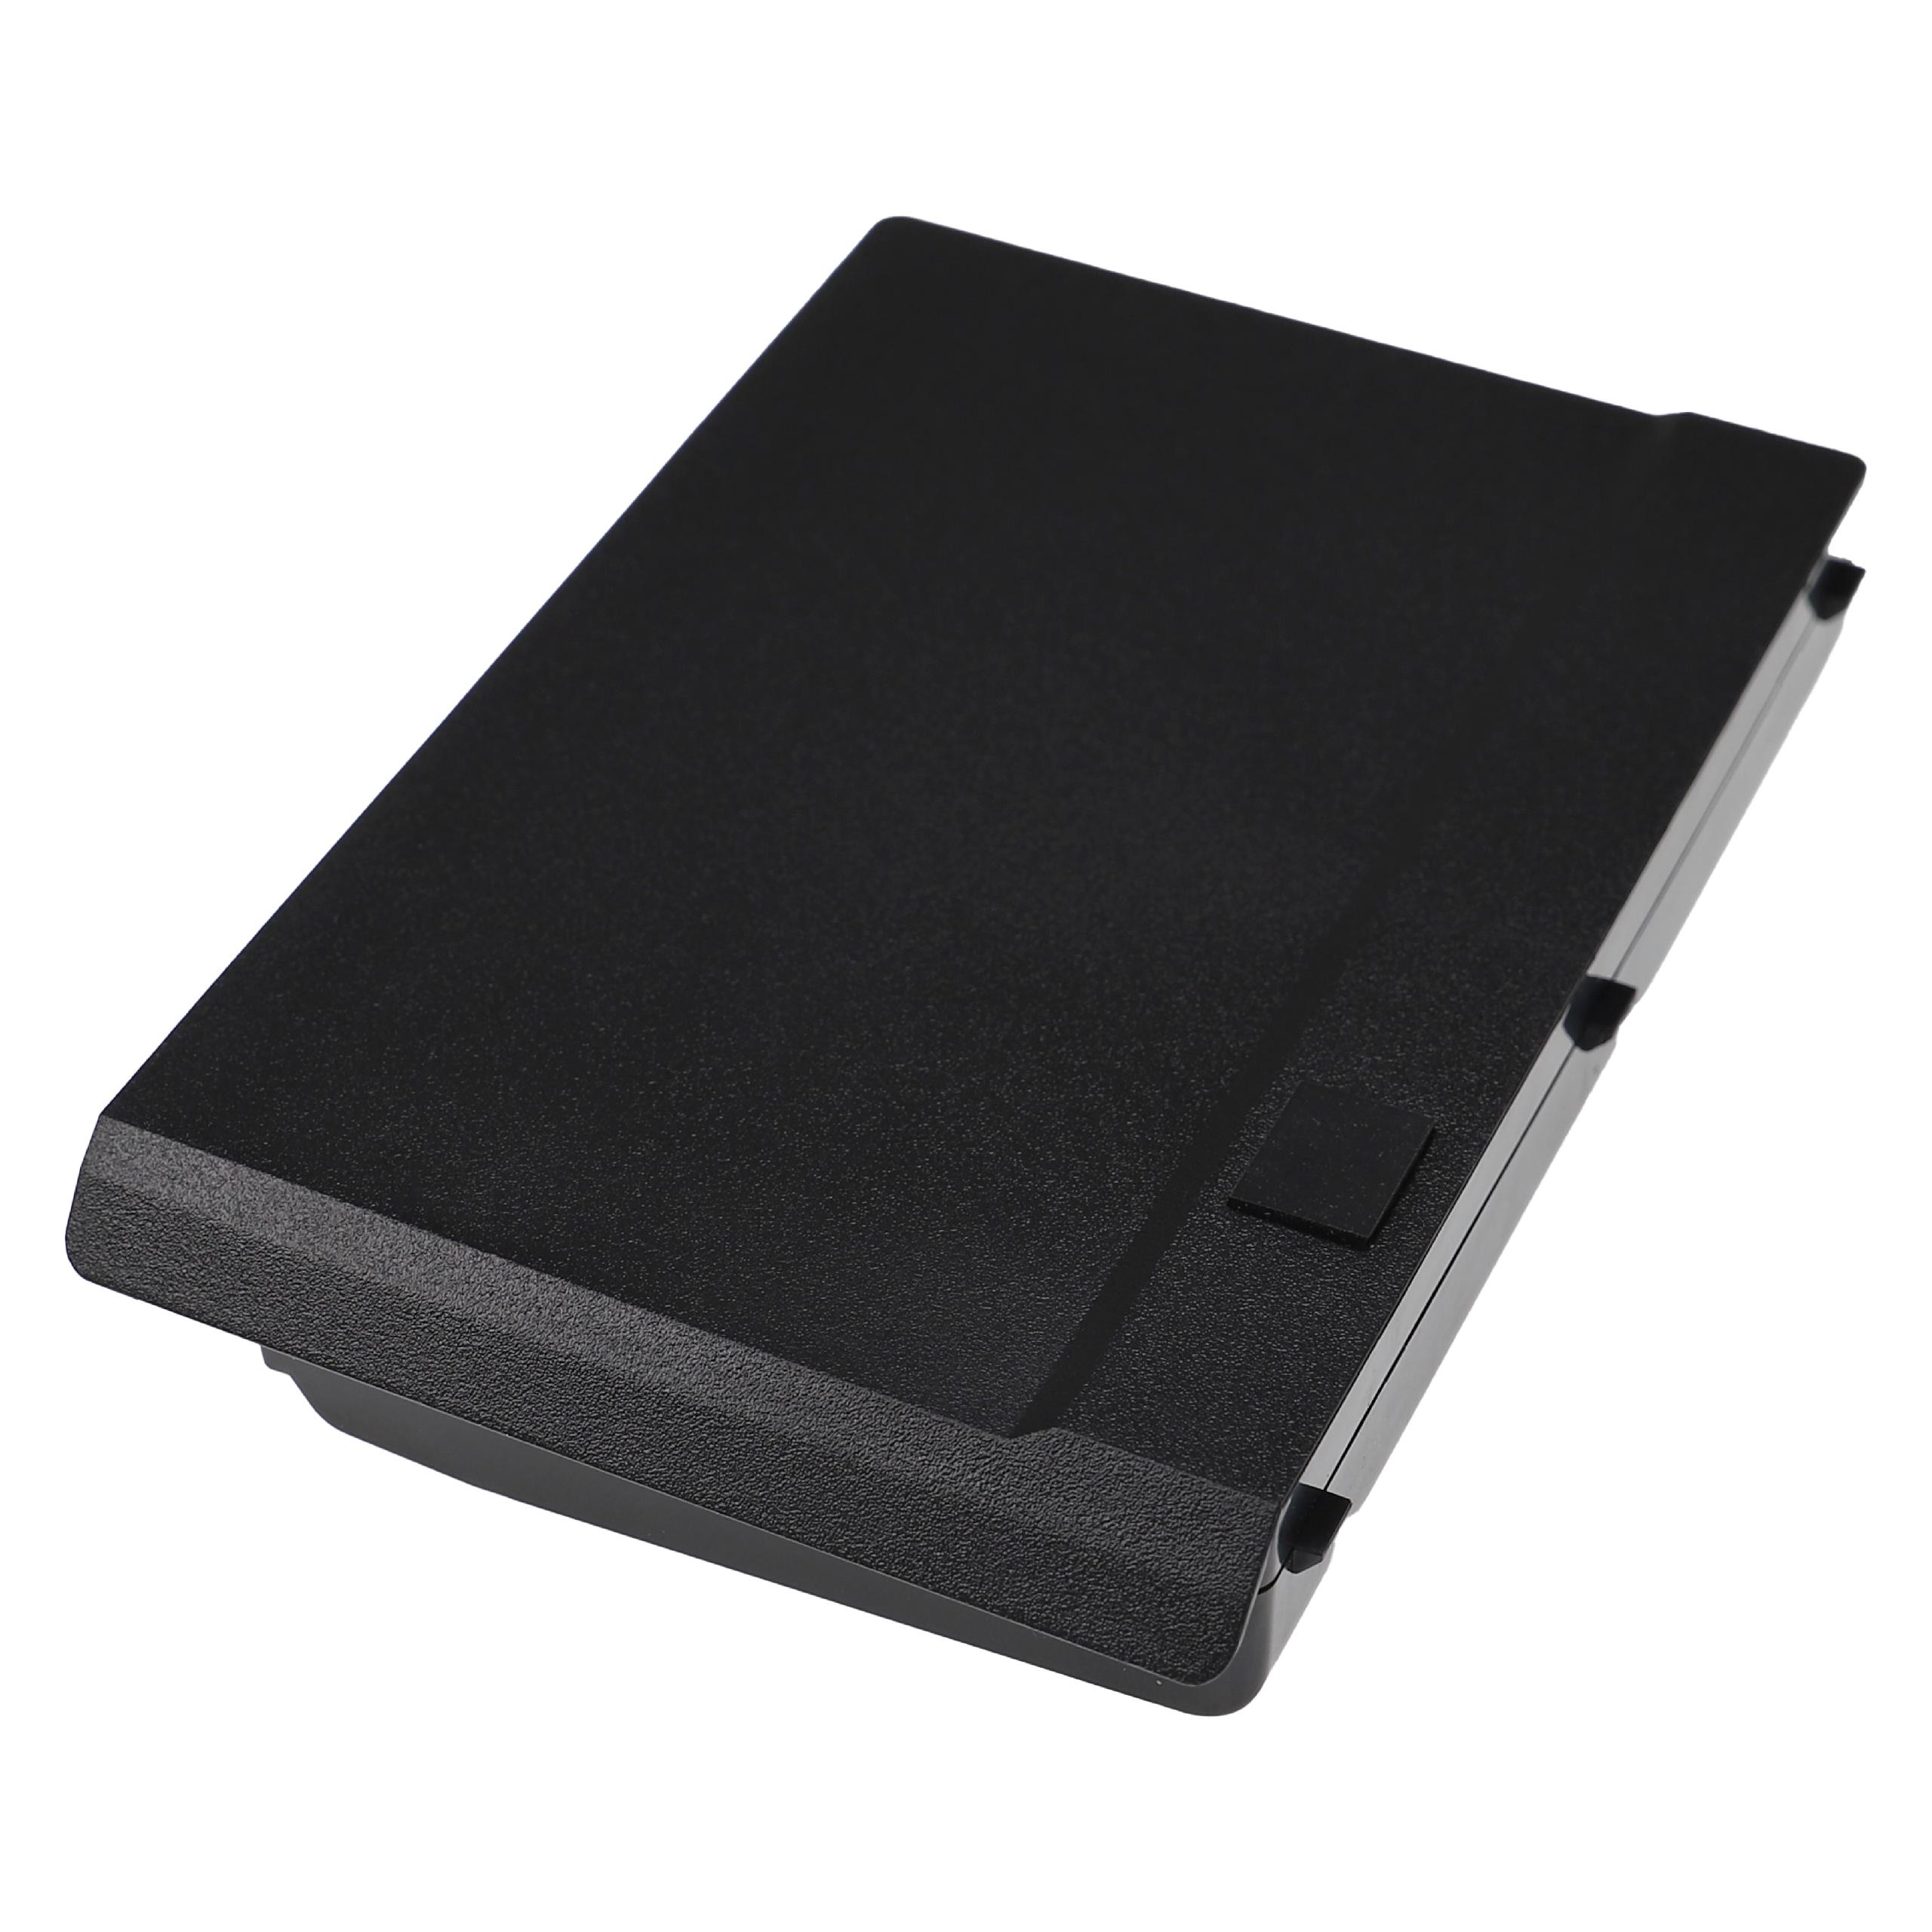 Li-Ion P2742, P2742G, P27G kompatibel - VHBW Gigabyte 5200 v2 mit Notebook, Akku